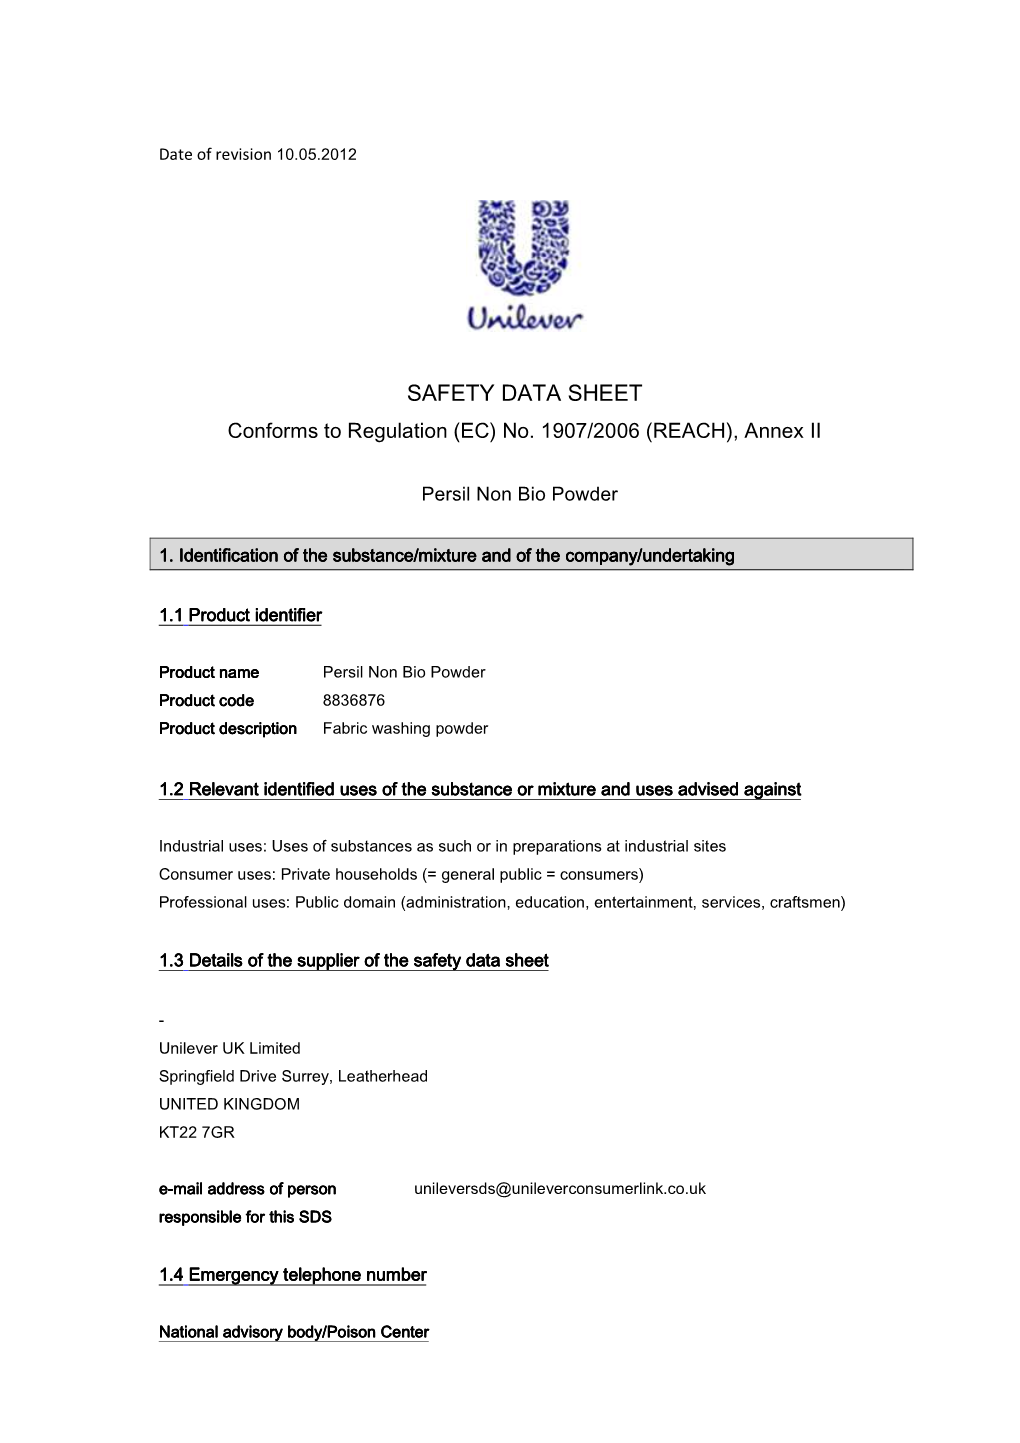 SAFETY DATA SHEET Conforms to Regulation (EC) No